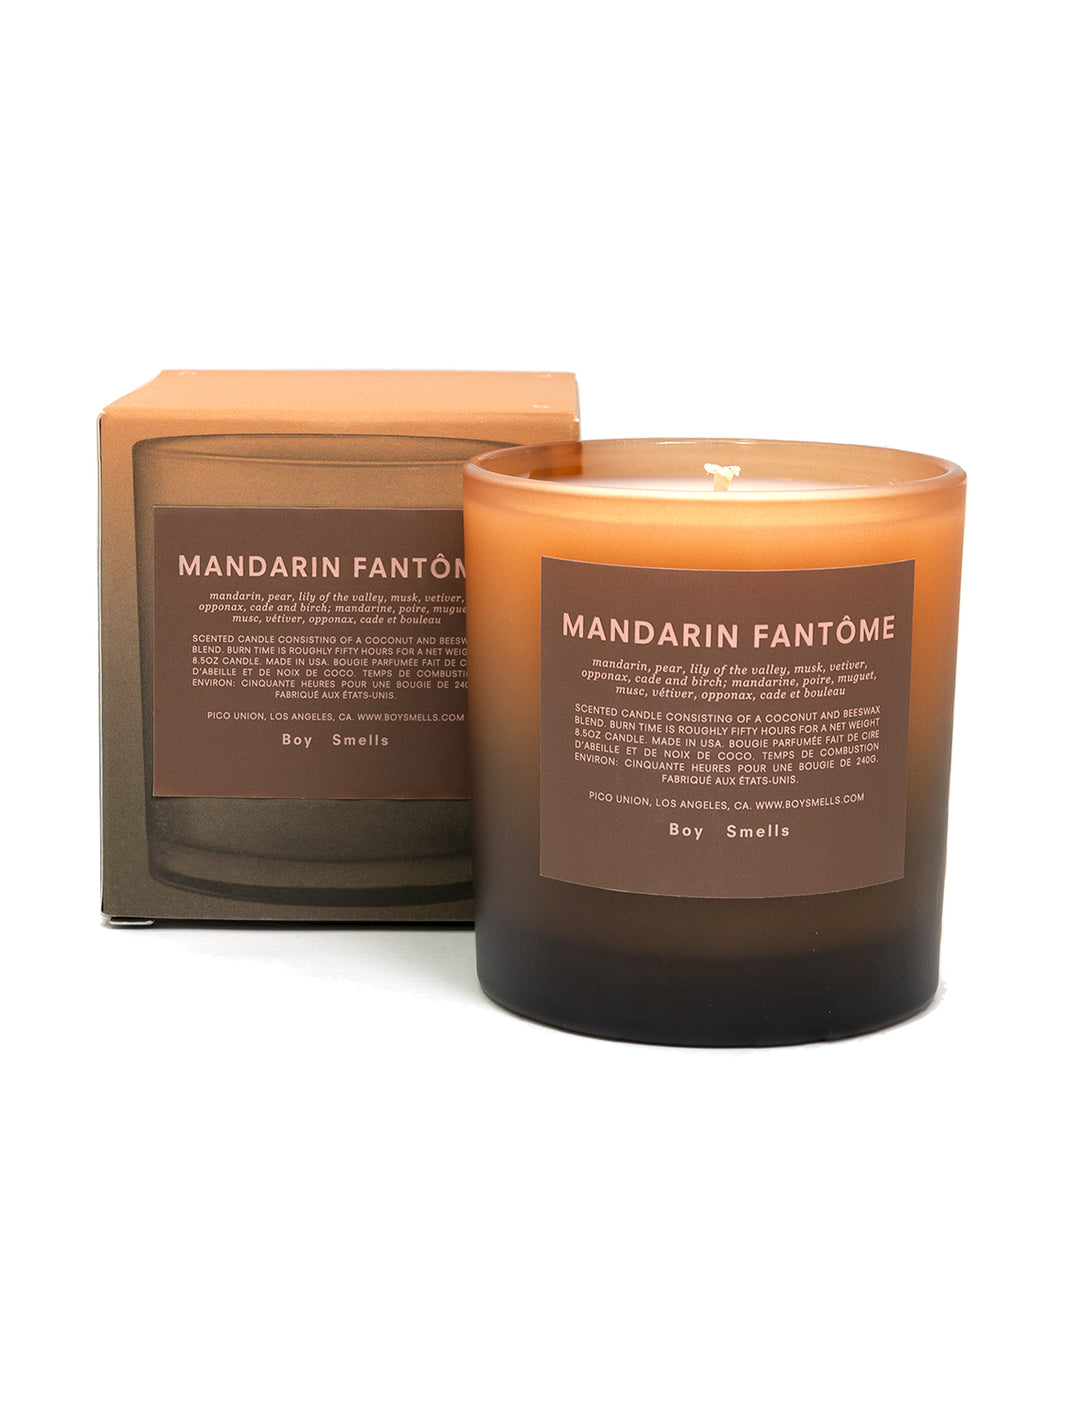 Boy Smells' mandarin fantome candle packaging.